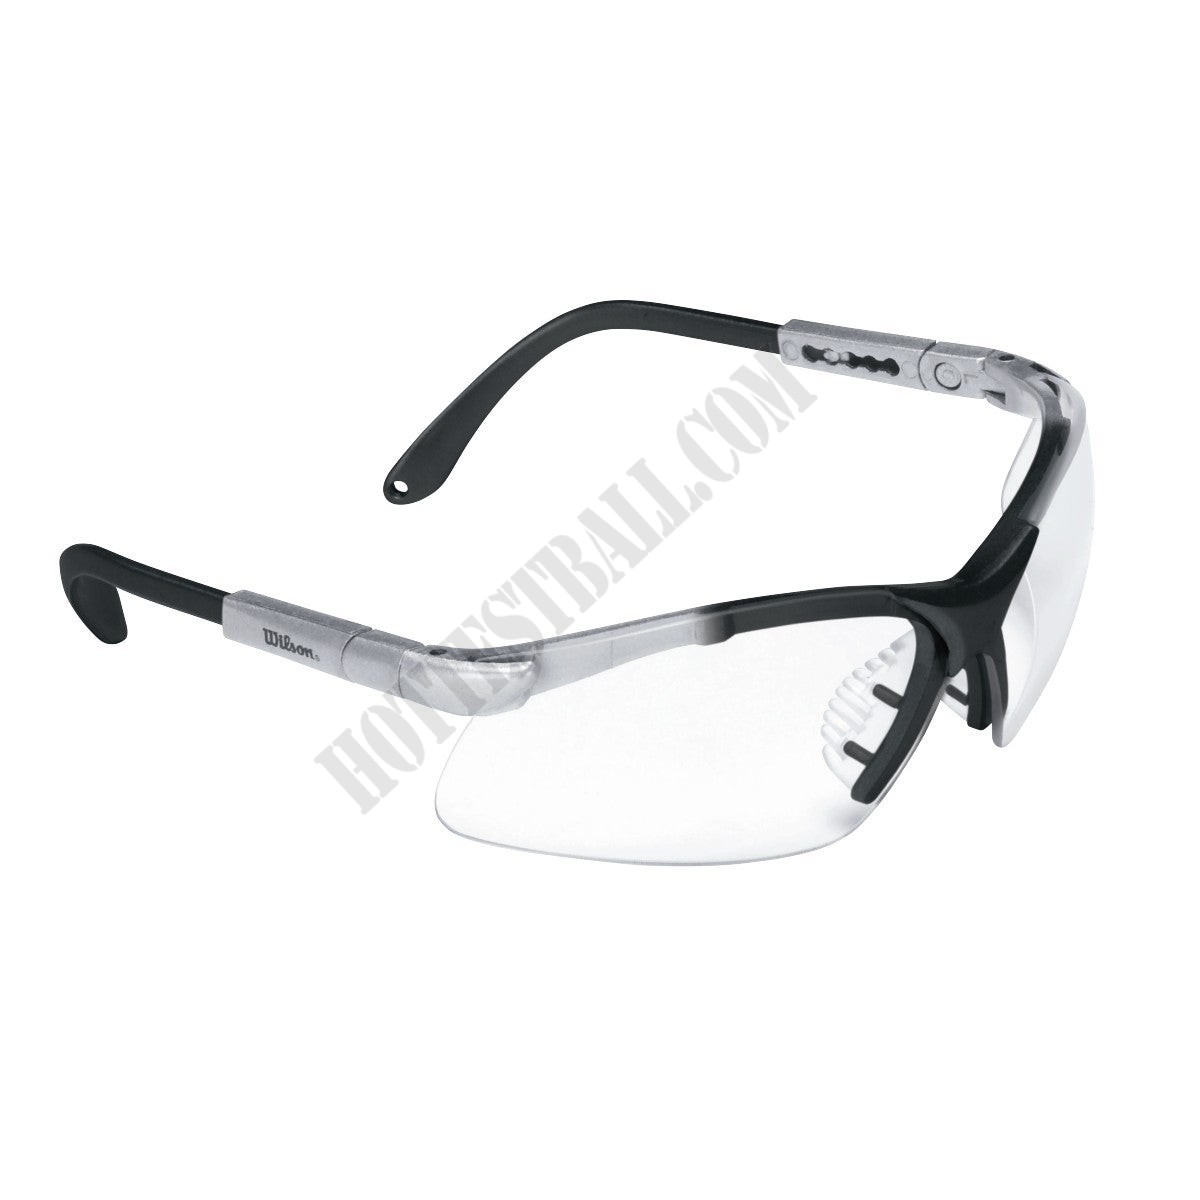 Aviator Protective Eyewear - Wilson Discount Store - Aviator Protective Eyewear - Wilson Discount Store